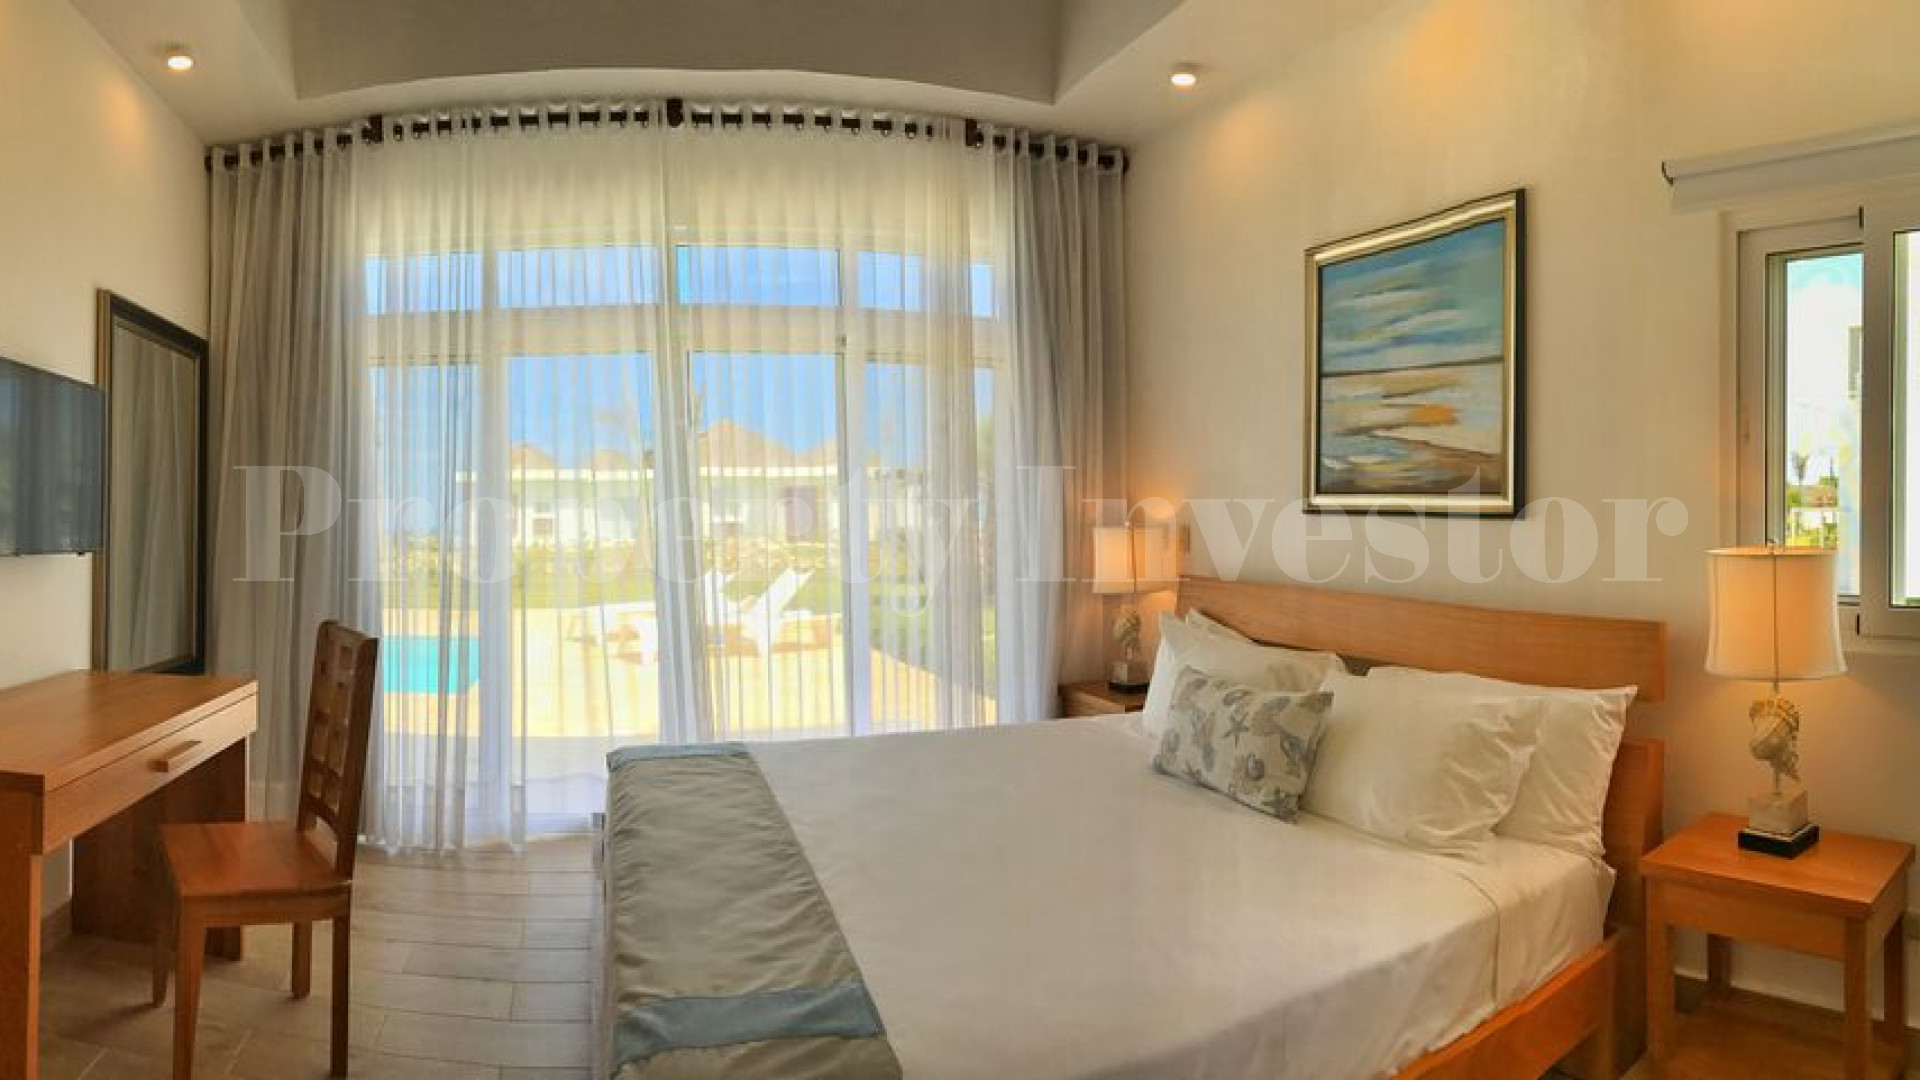 3 Bedroom Oceanview Villa in the Dominican Republic with 30 Year Financing (Villa 20)